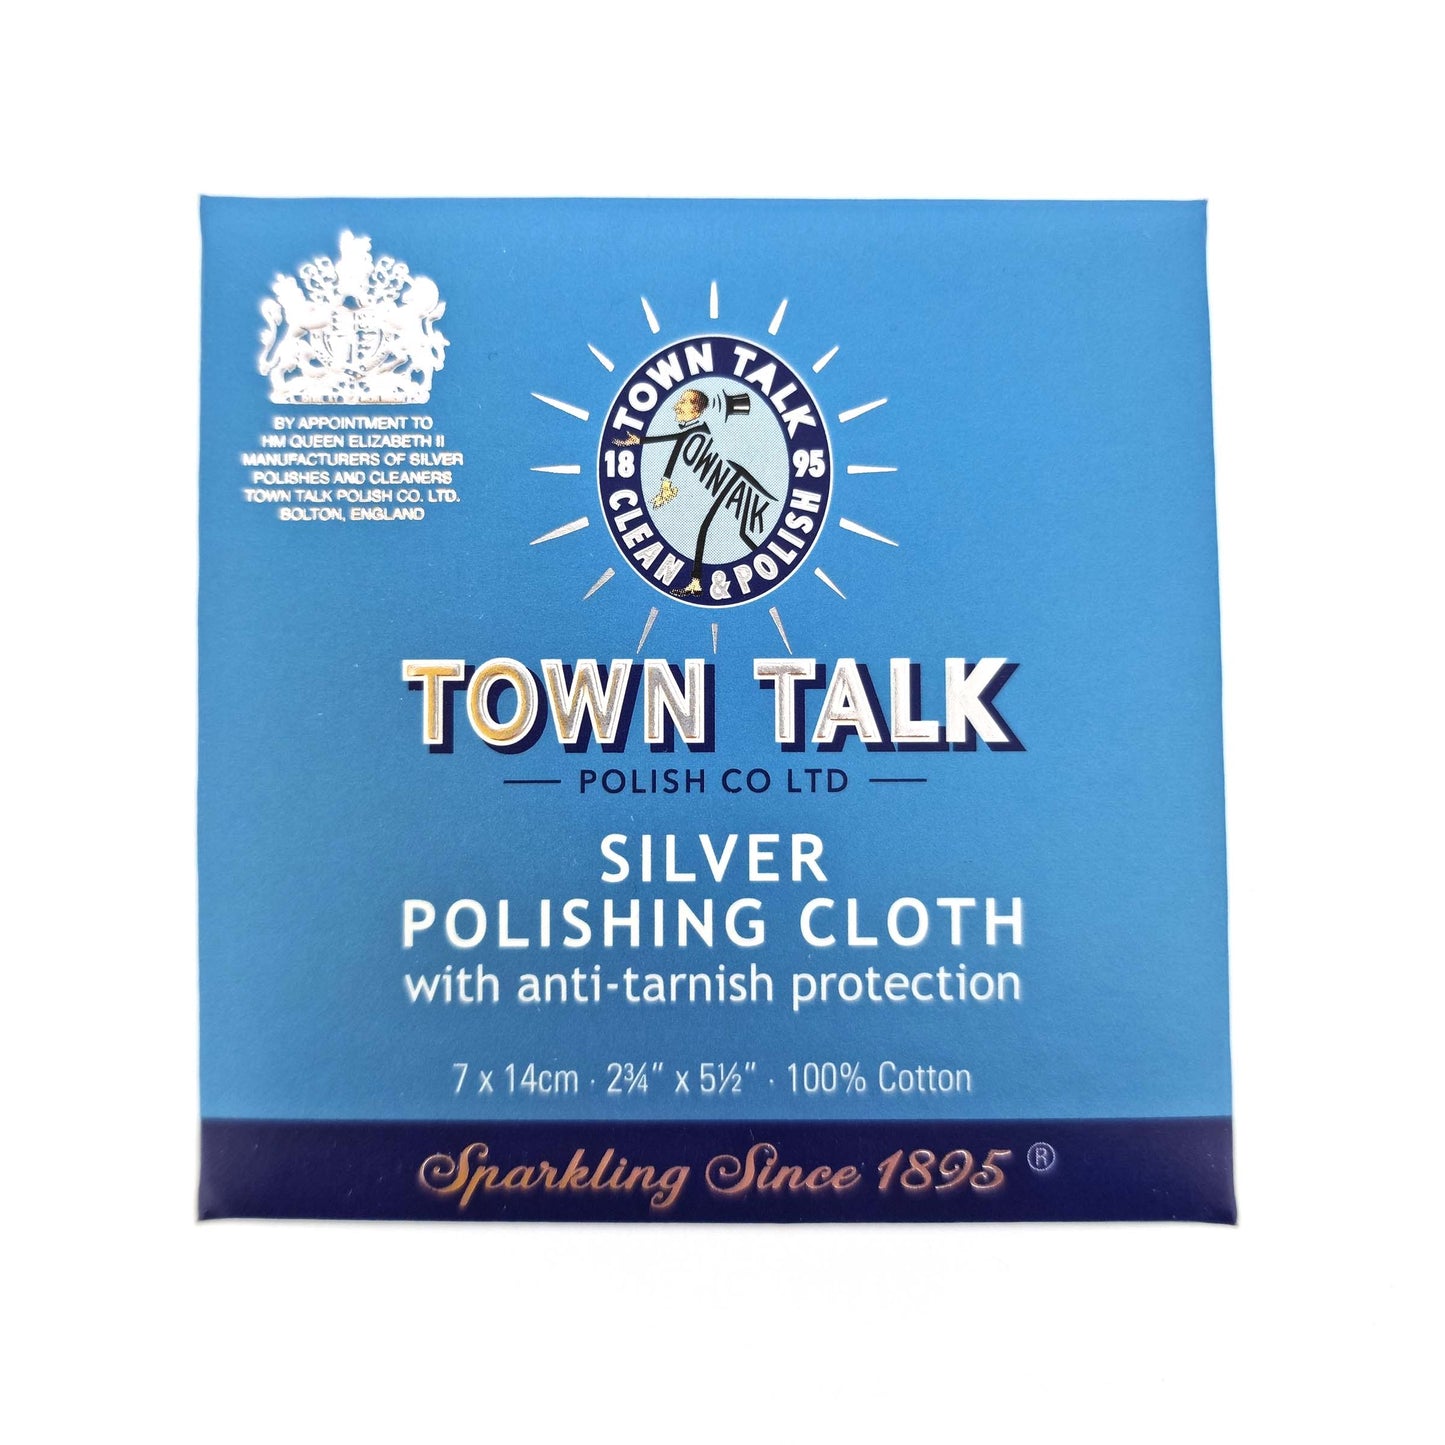 A silver polishing cloth by Town Talk